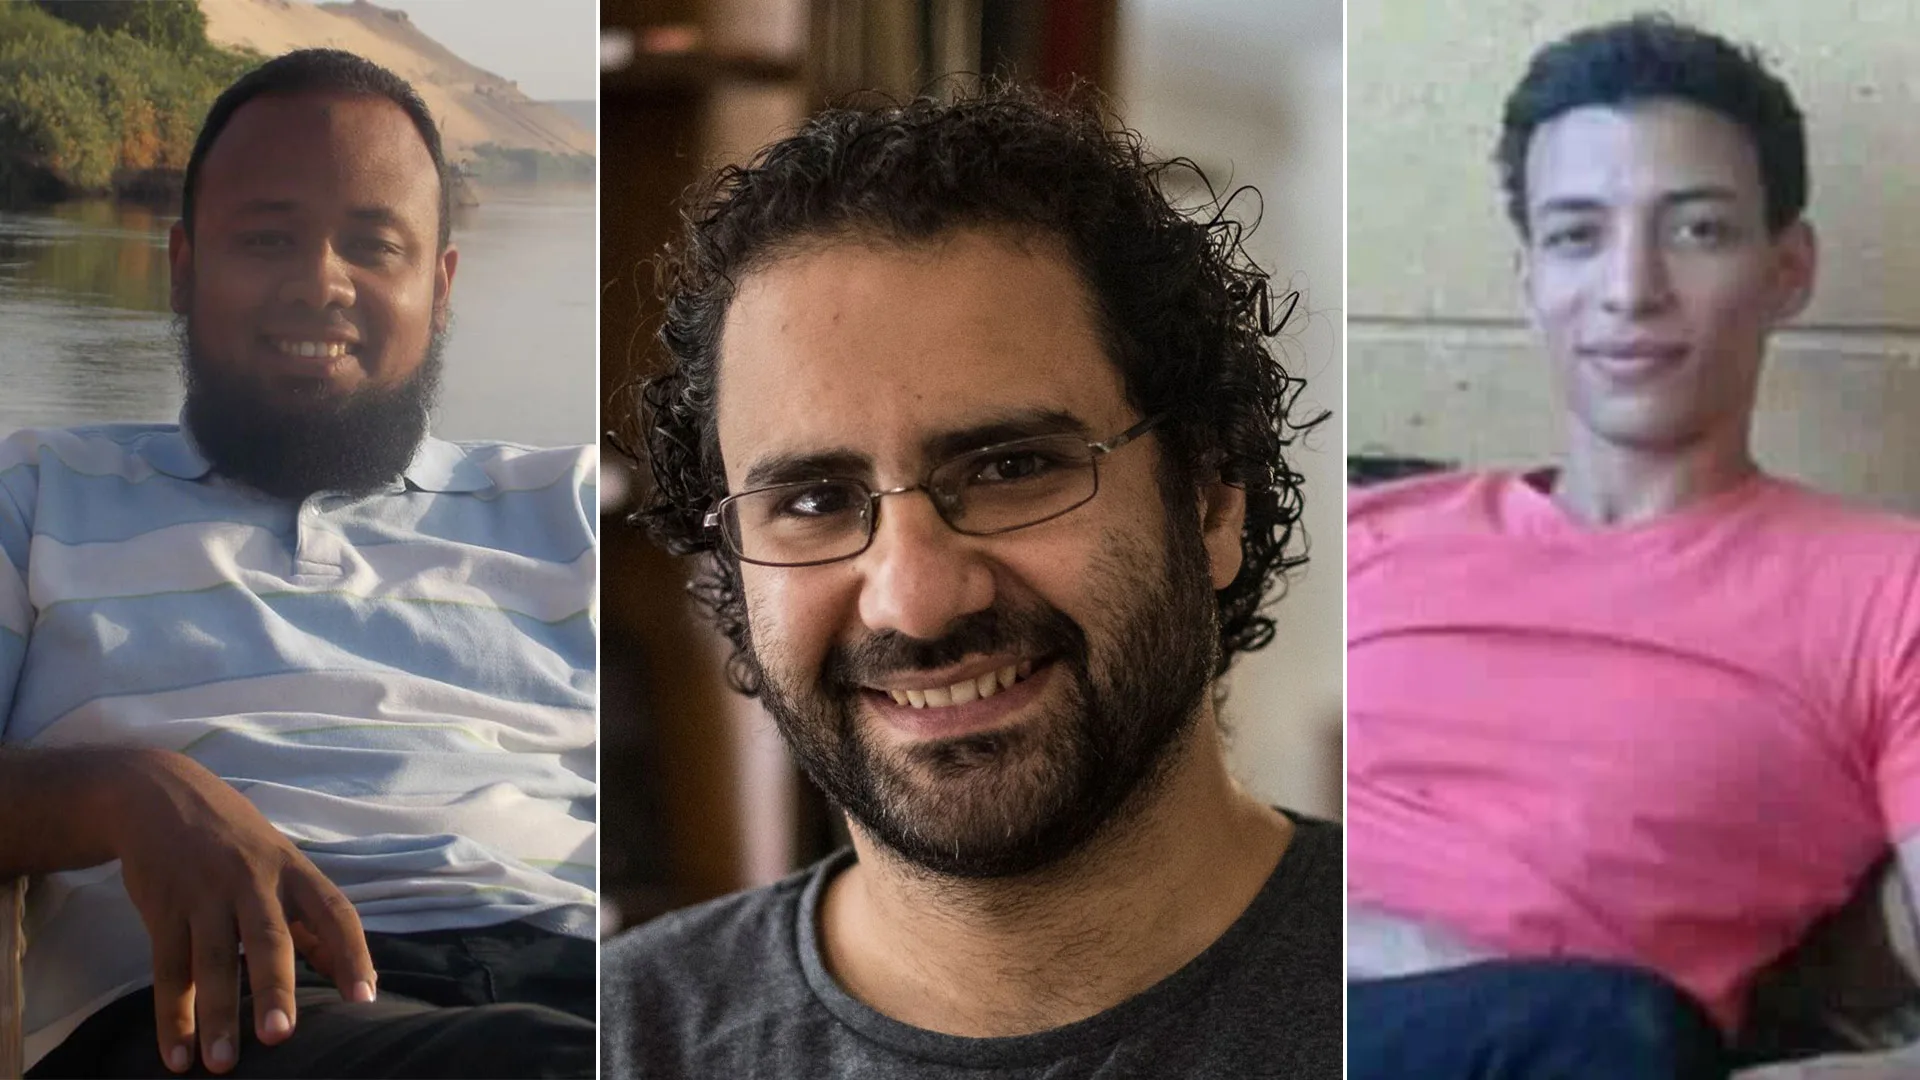 أحكام بالحبس تترواح بين 4 و5 سنوات ضد 3 نشطاء مصريين.